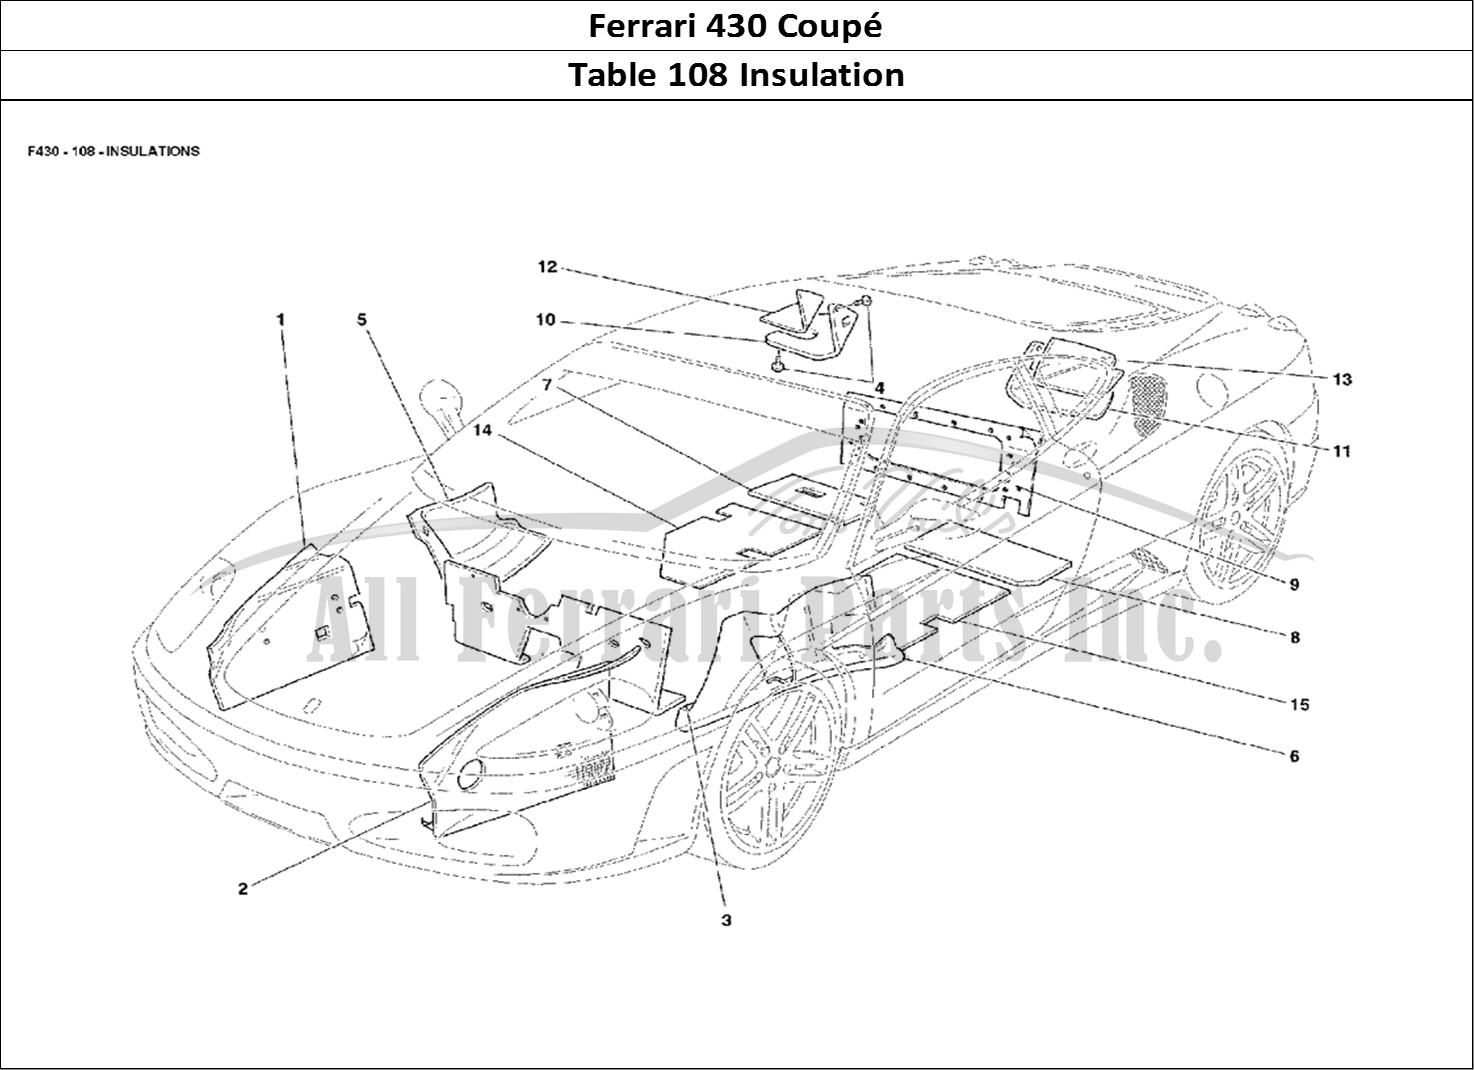 Ferrari Parts Ferrari 430 Coup Page 108 Insulations